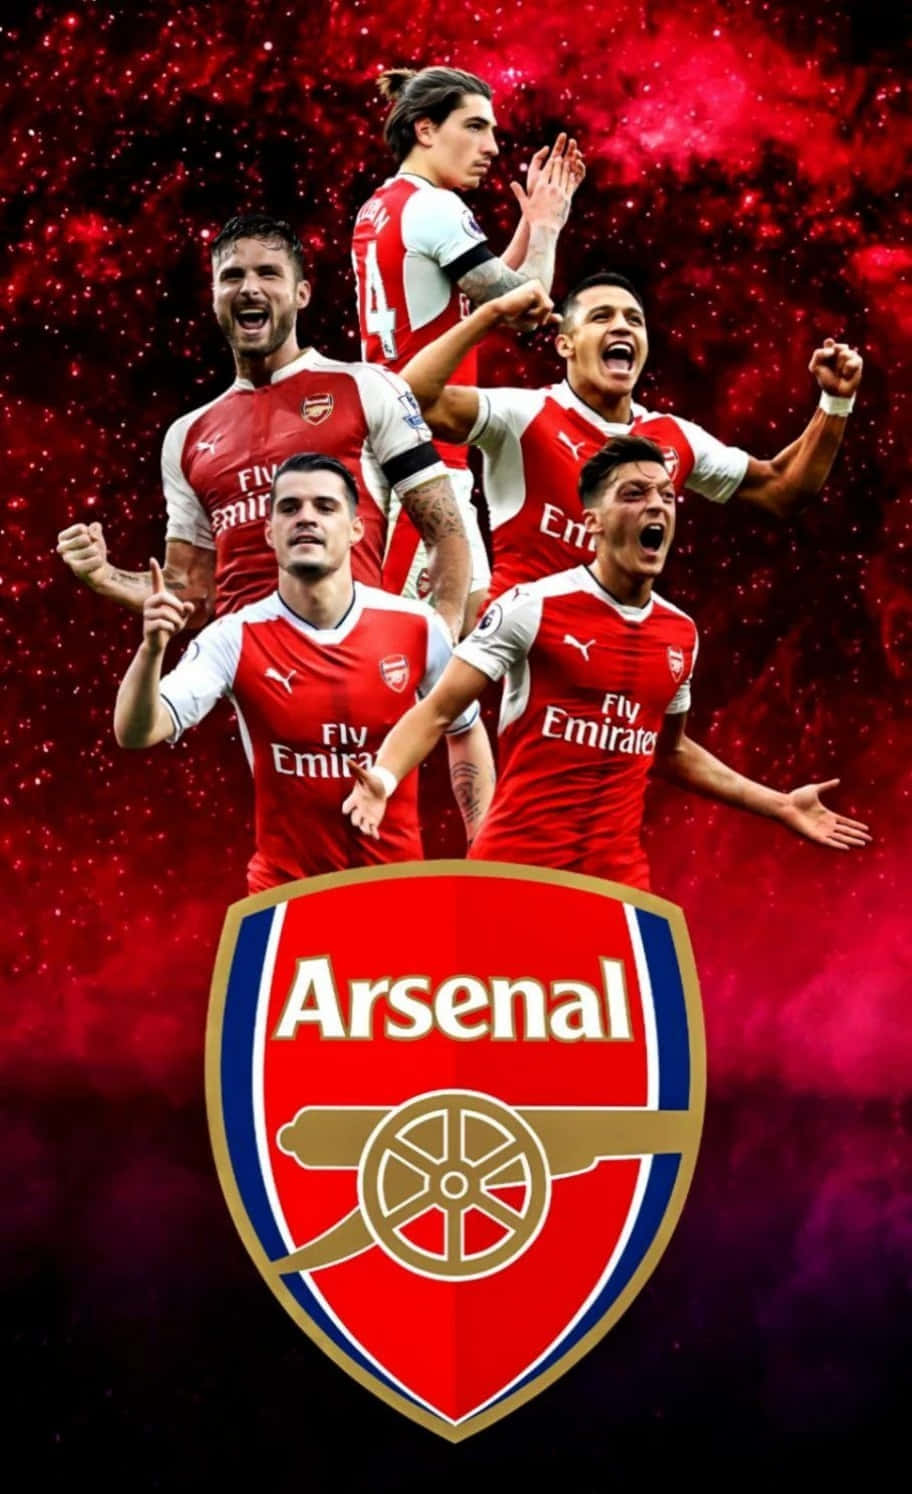 Arsenal team posing at the stadium